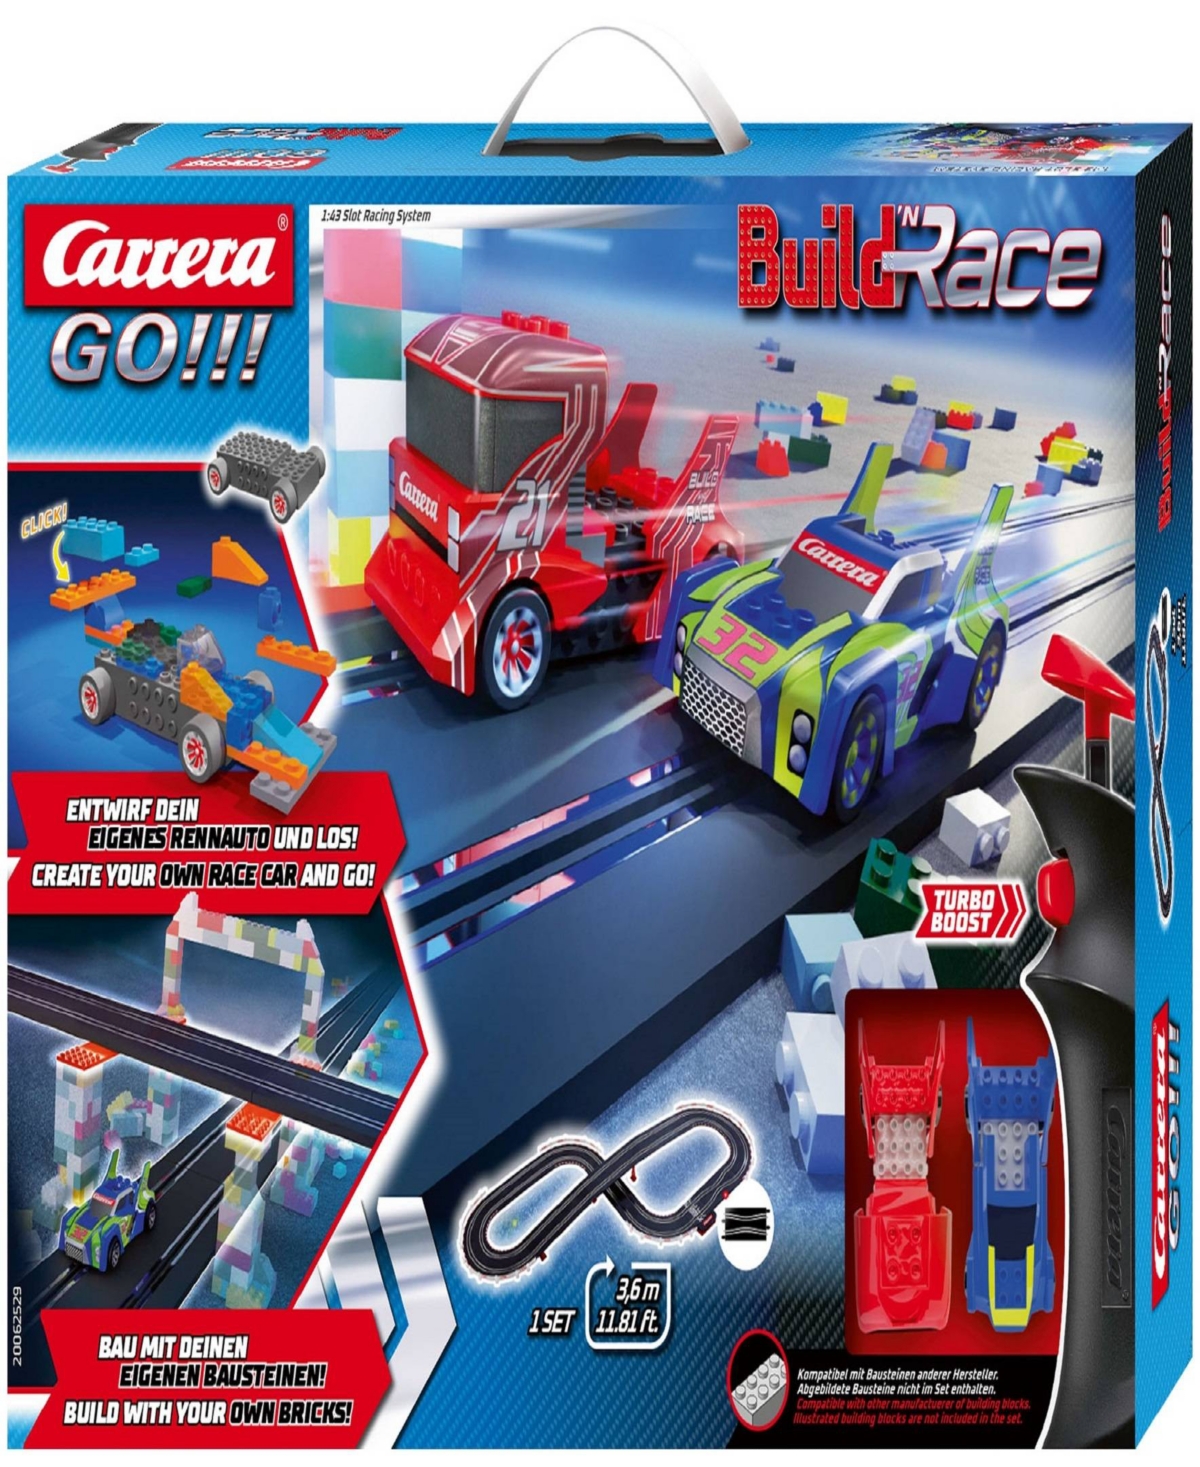 Carrera Kids' Go Build 'n Race 11.81' Electric Powered Slot Car Race Track Set In Black